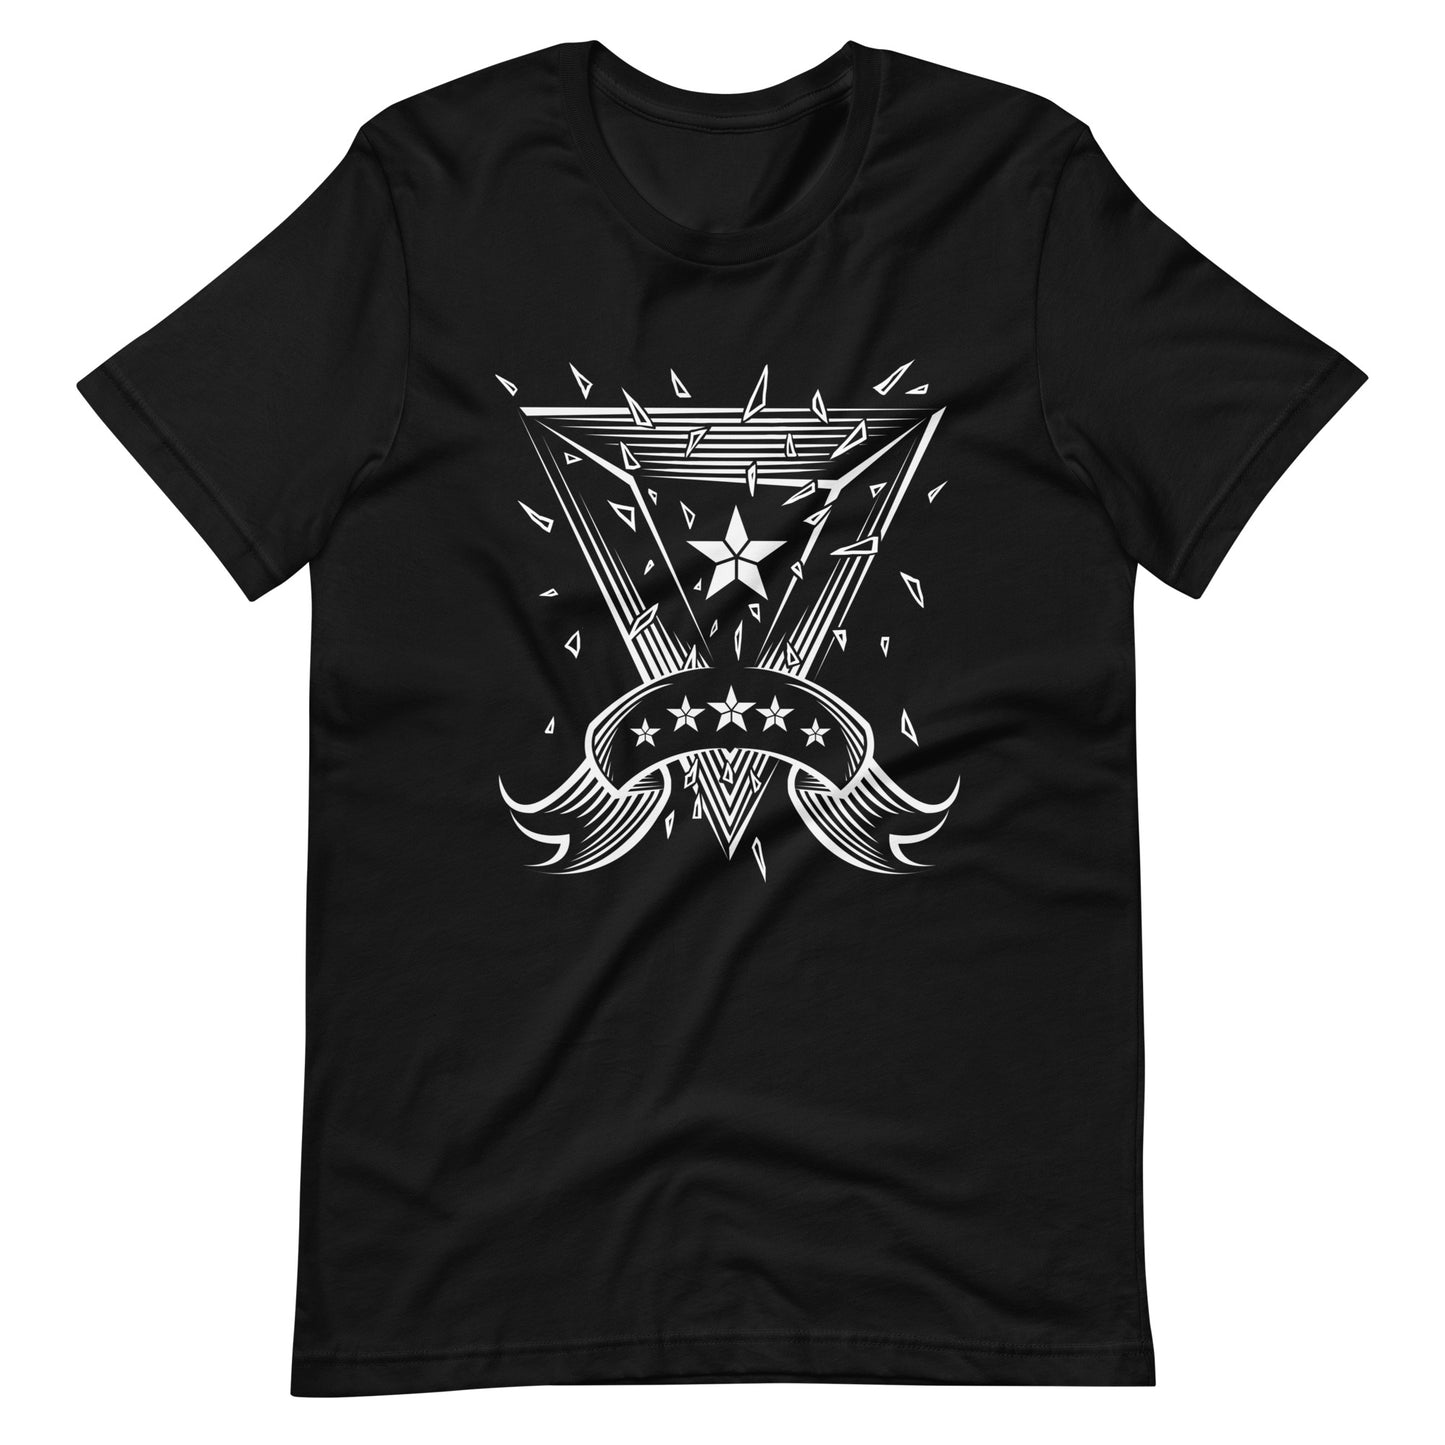 Starlight - Men's t-shirt - Black Front